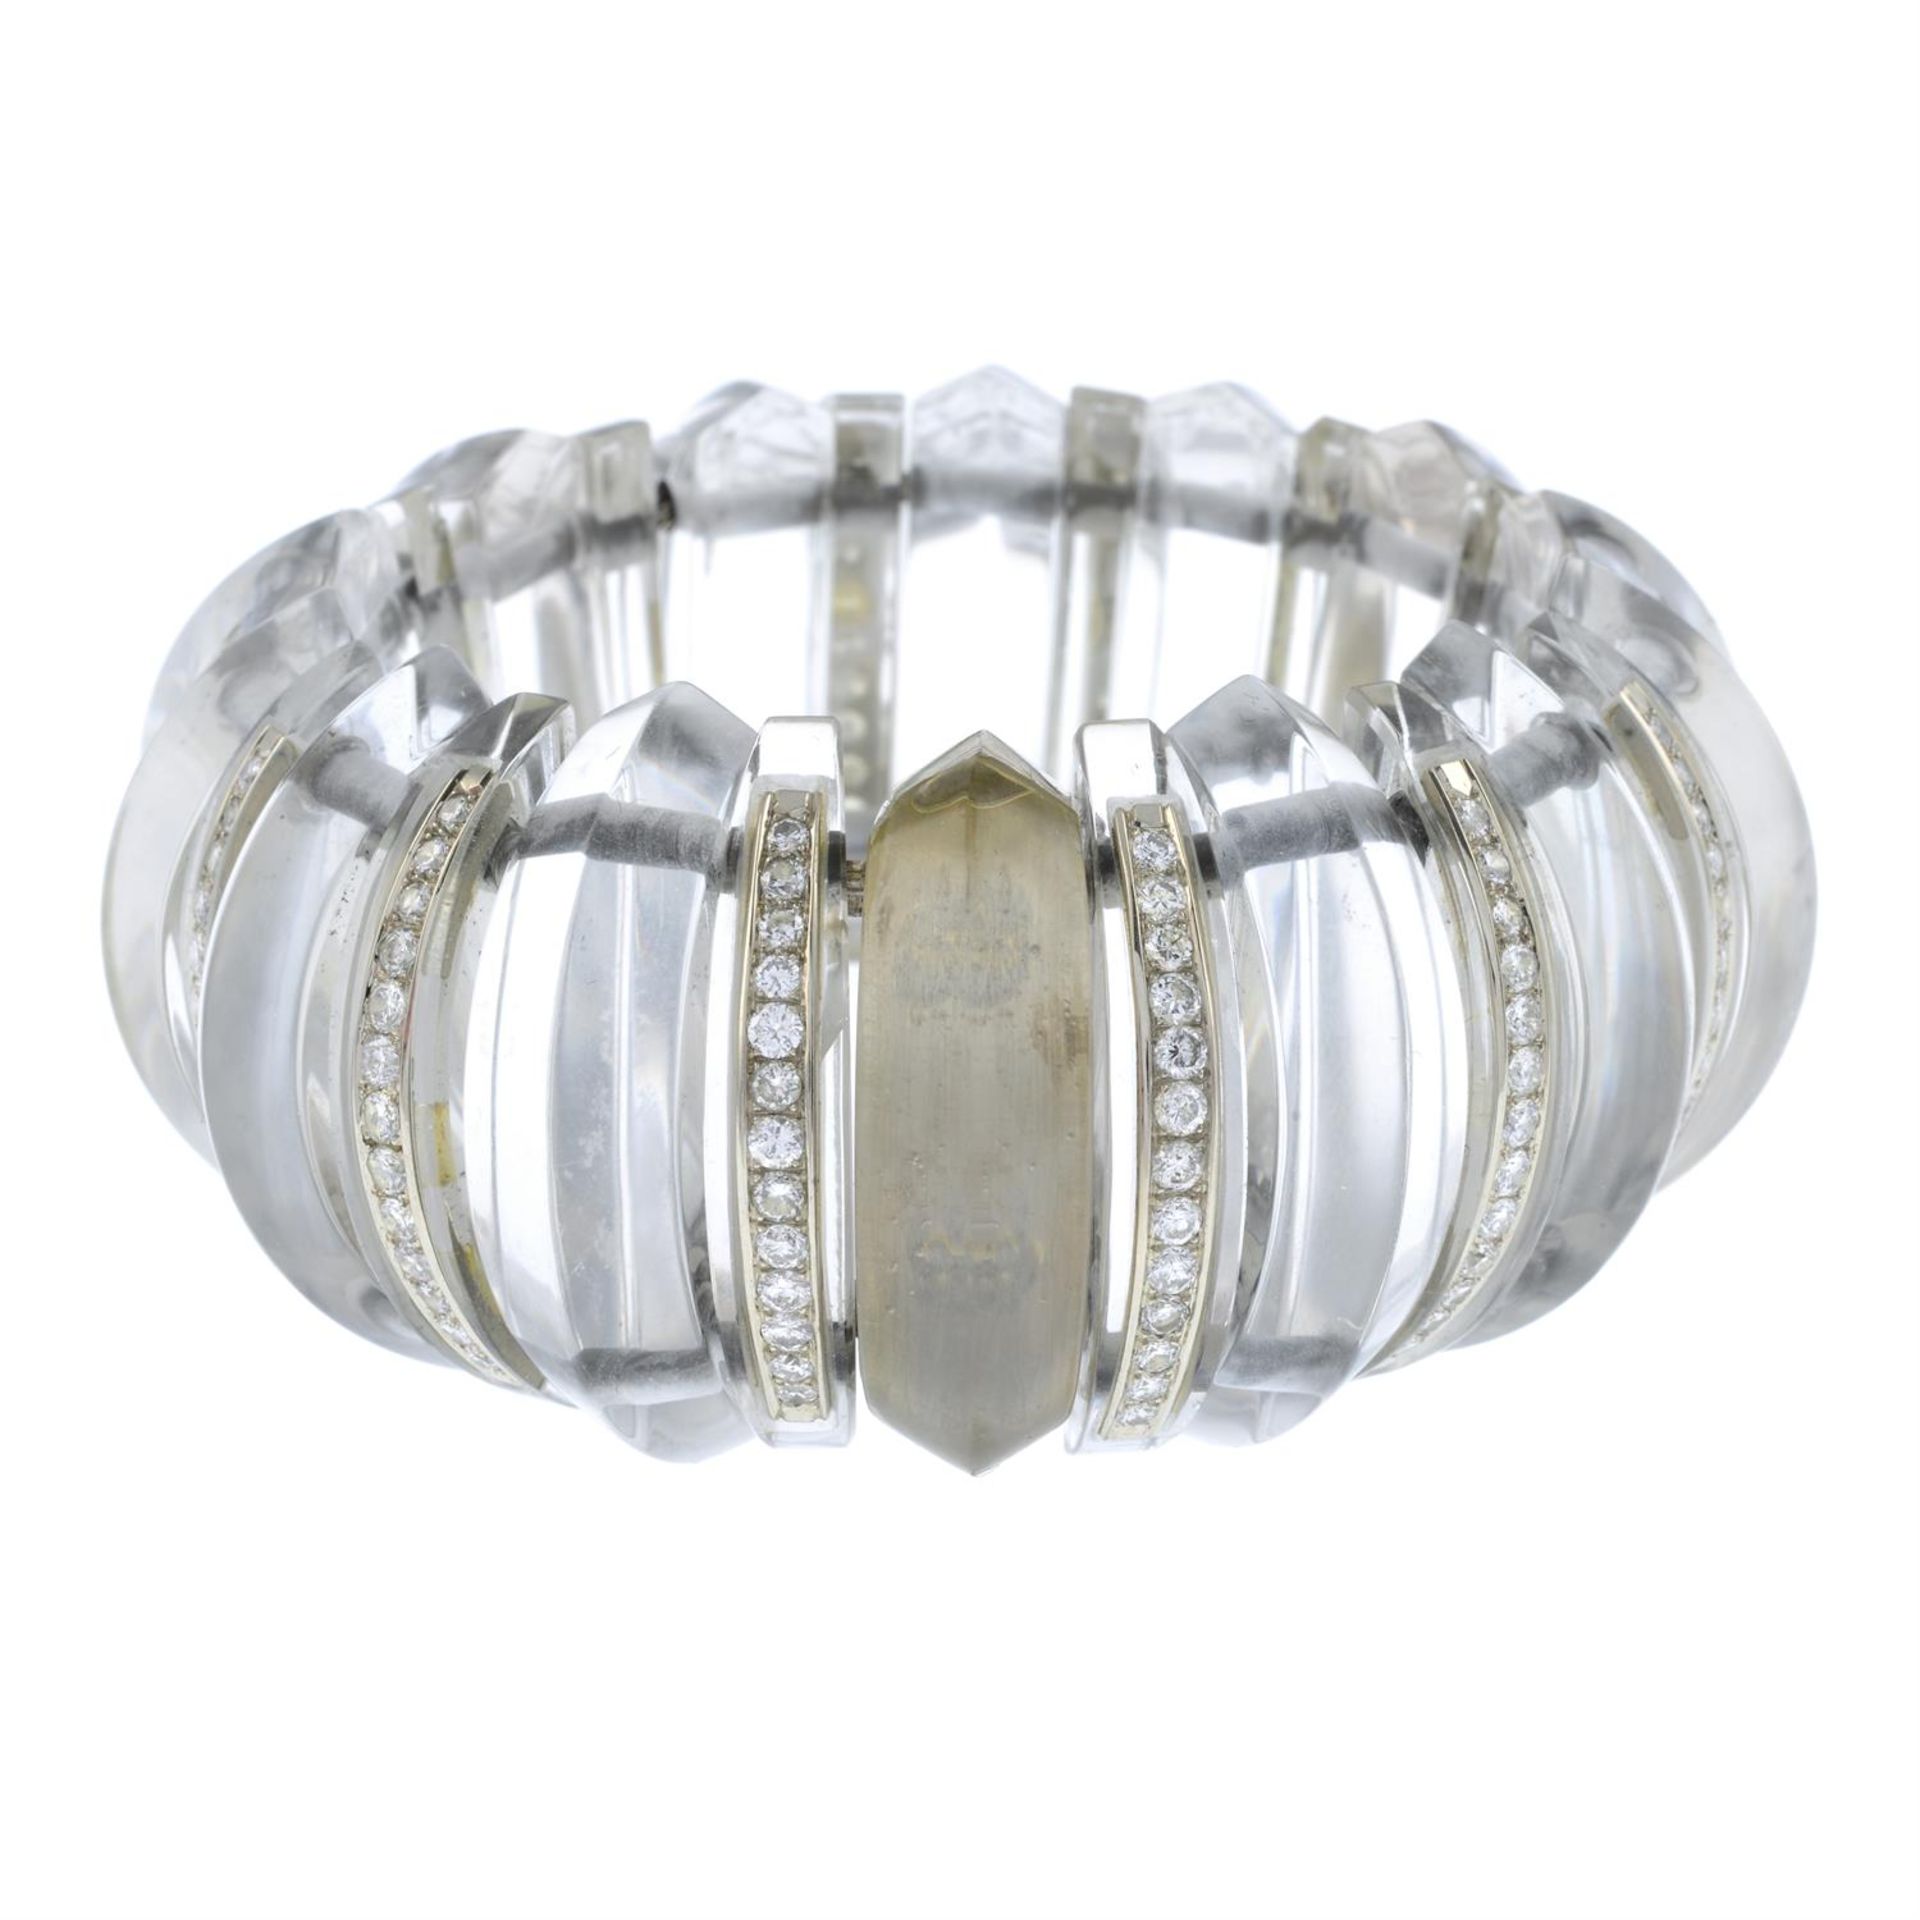 Diamond and rock crystal bracelet, by Demner - Image 3 of 3